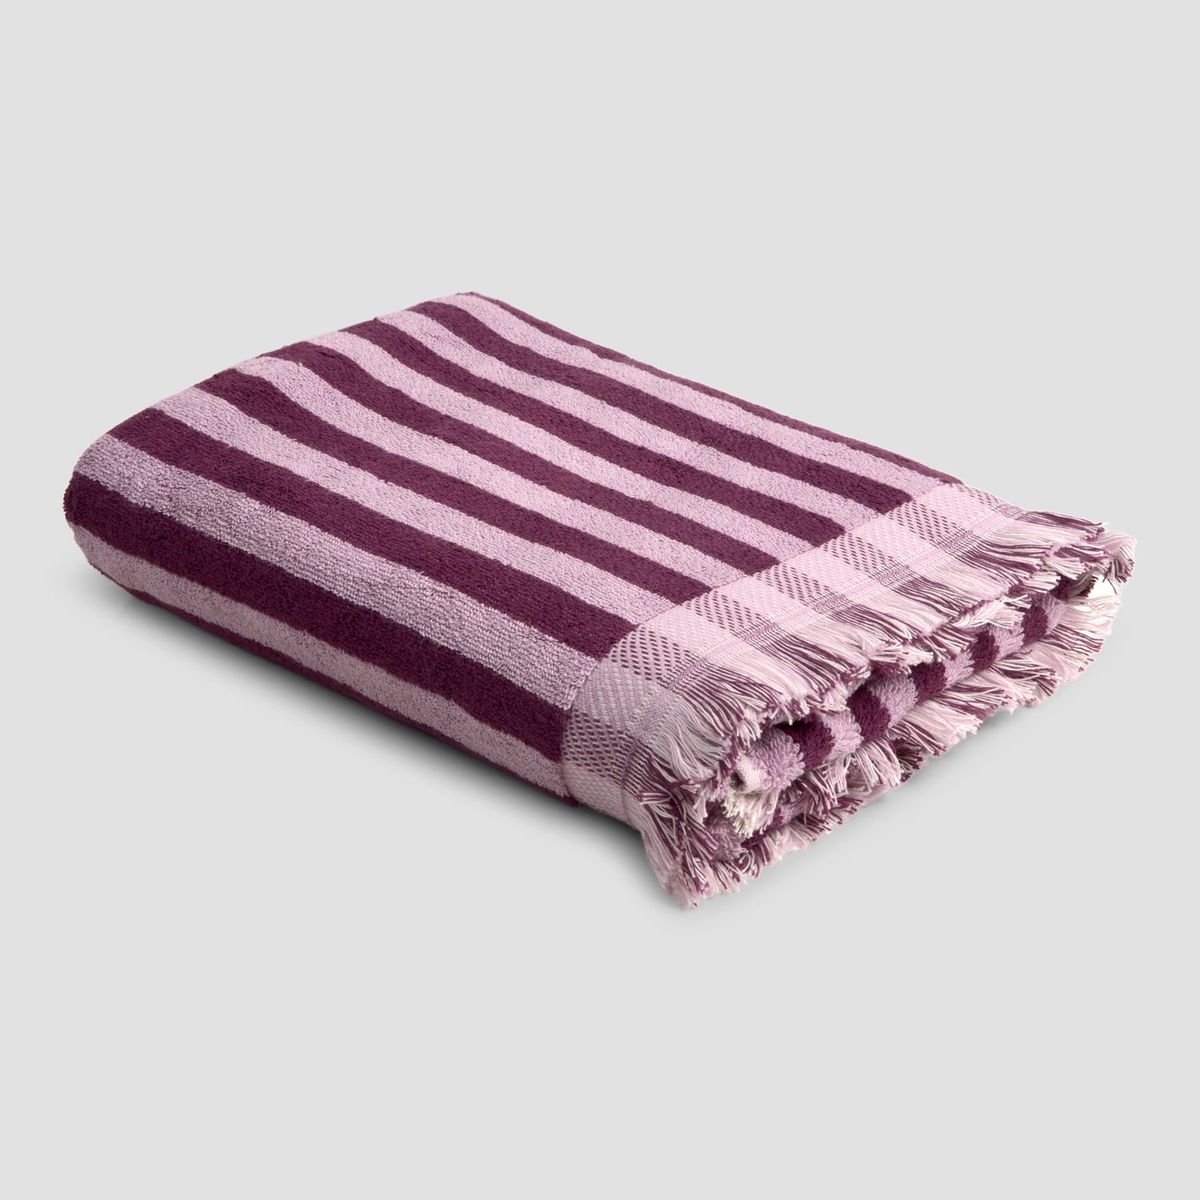 Piglet in Bed Cotton Hand Towel